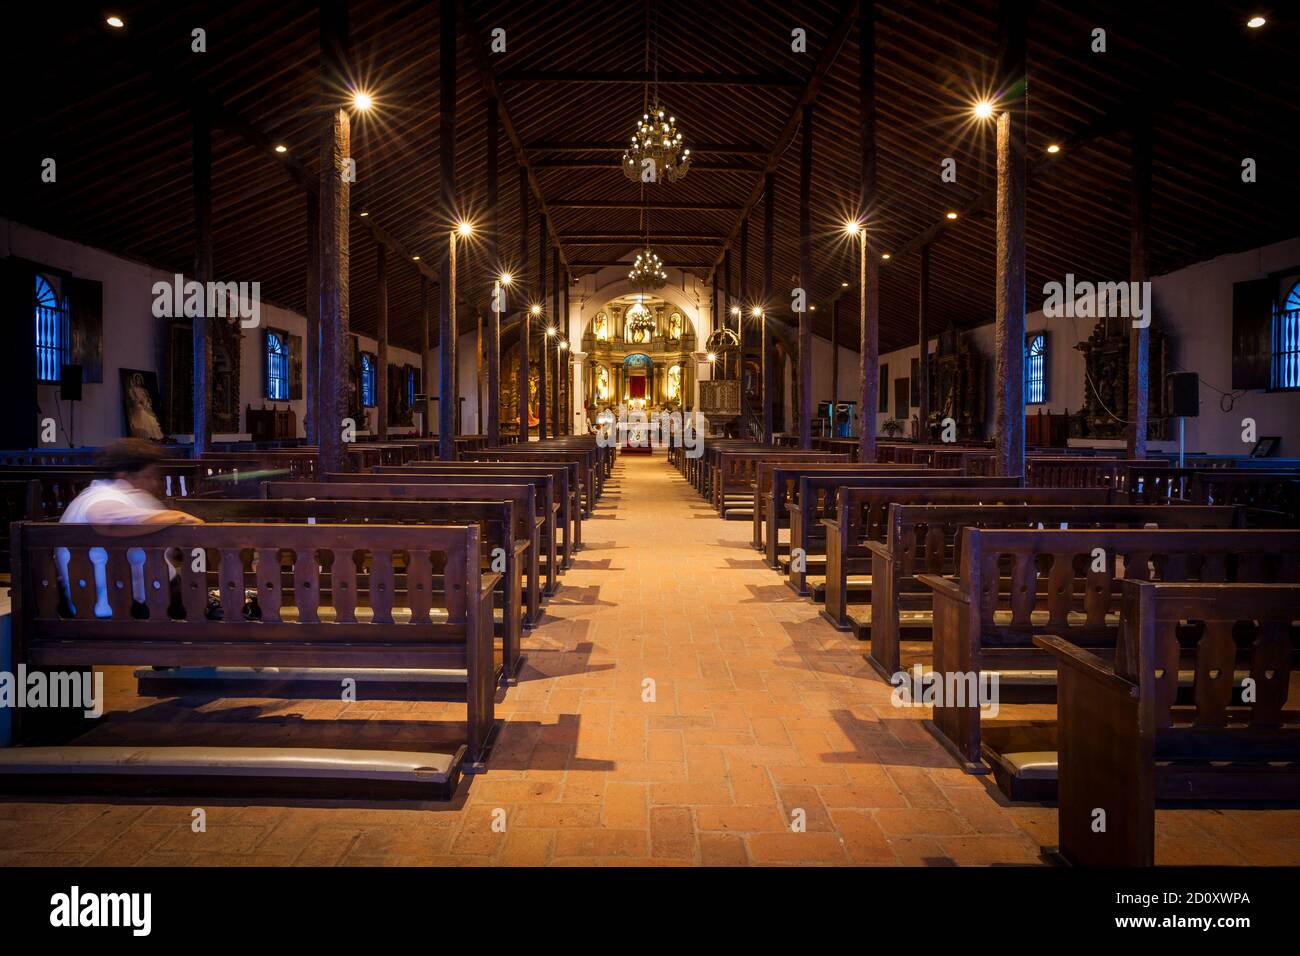 Iglesias de panama fotografías e imágenes de alta resolución - Alamy